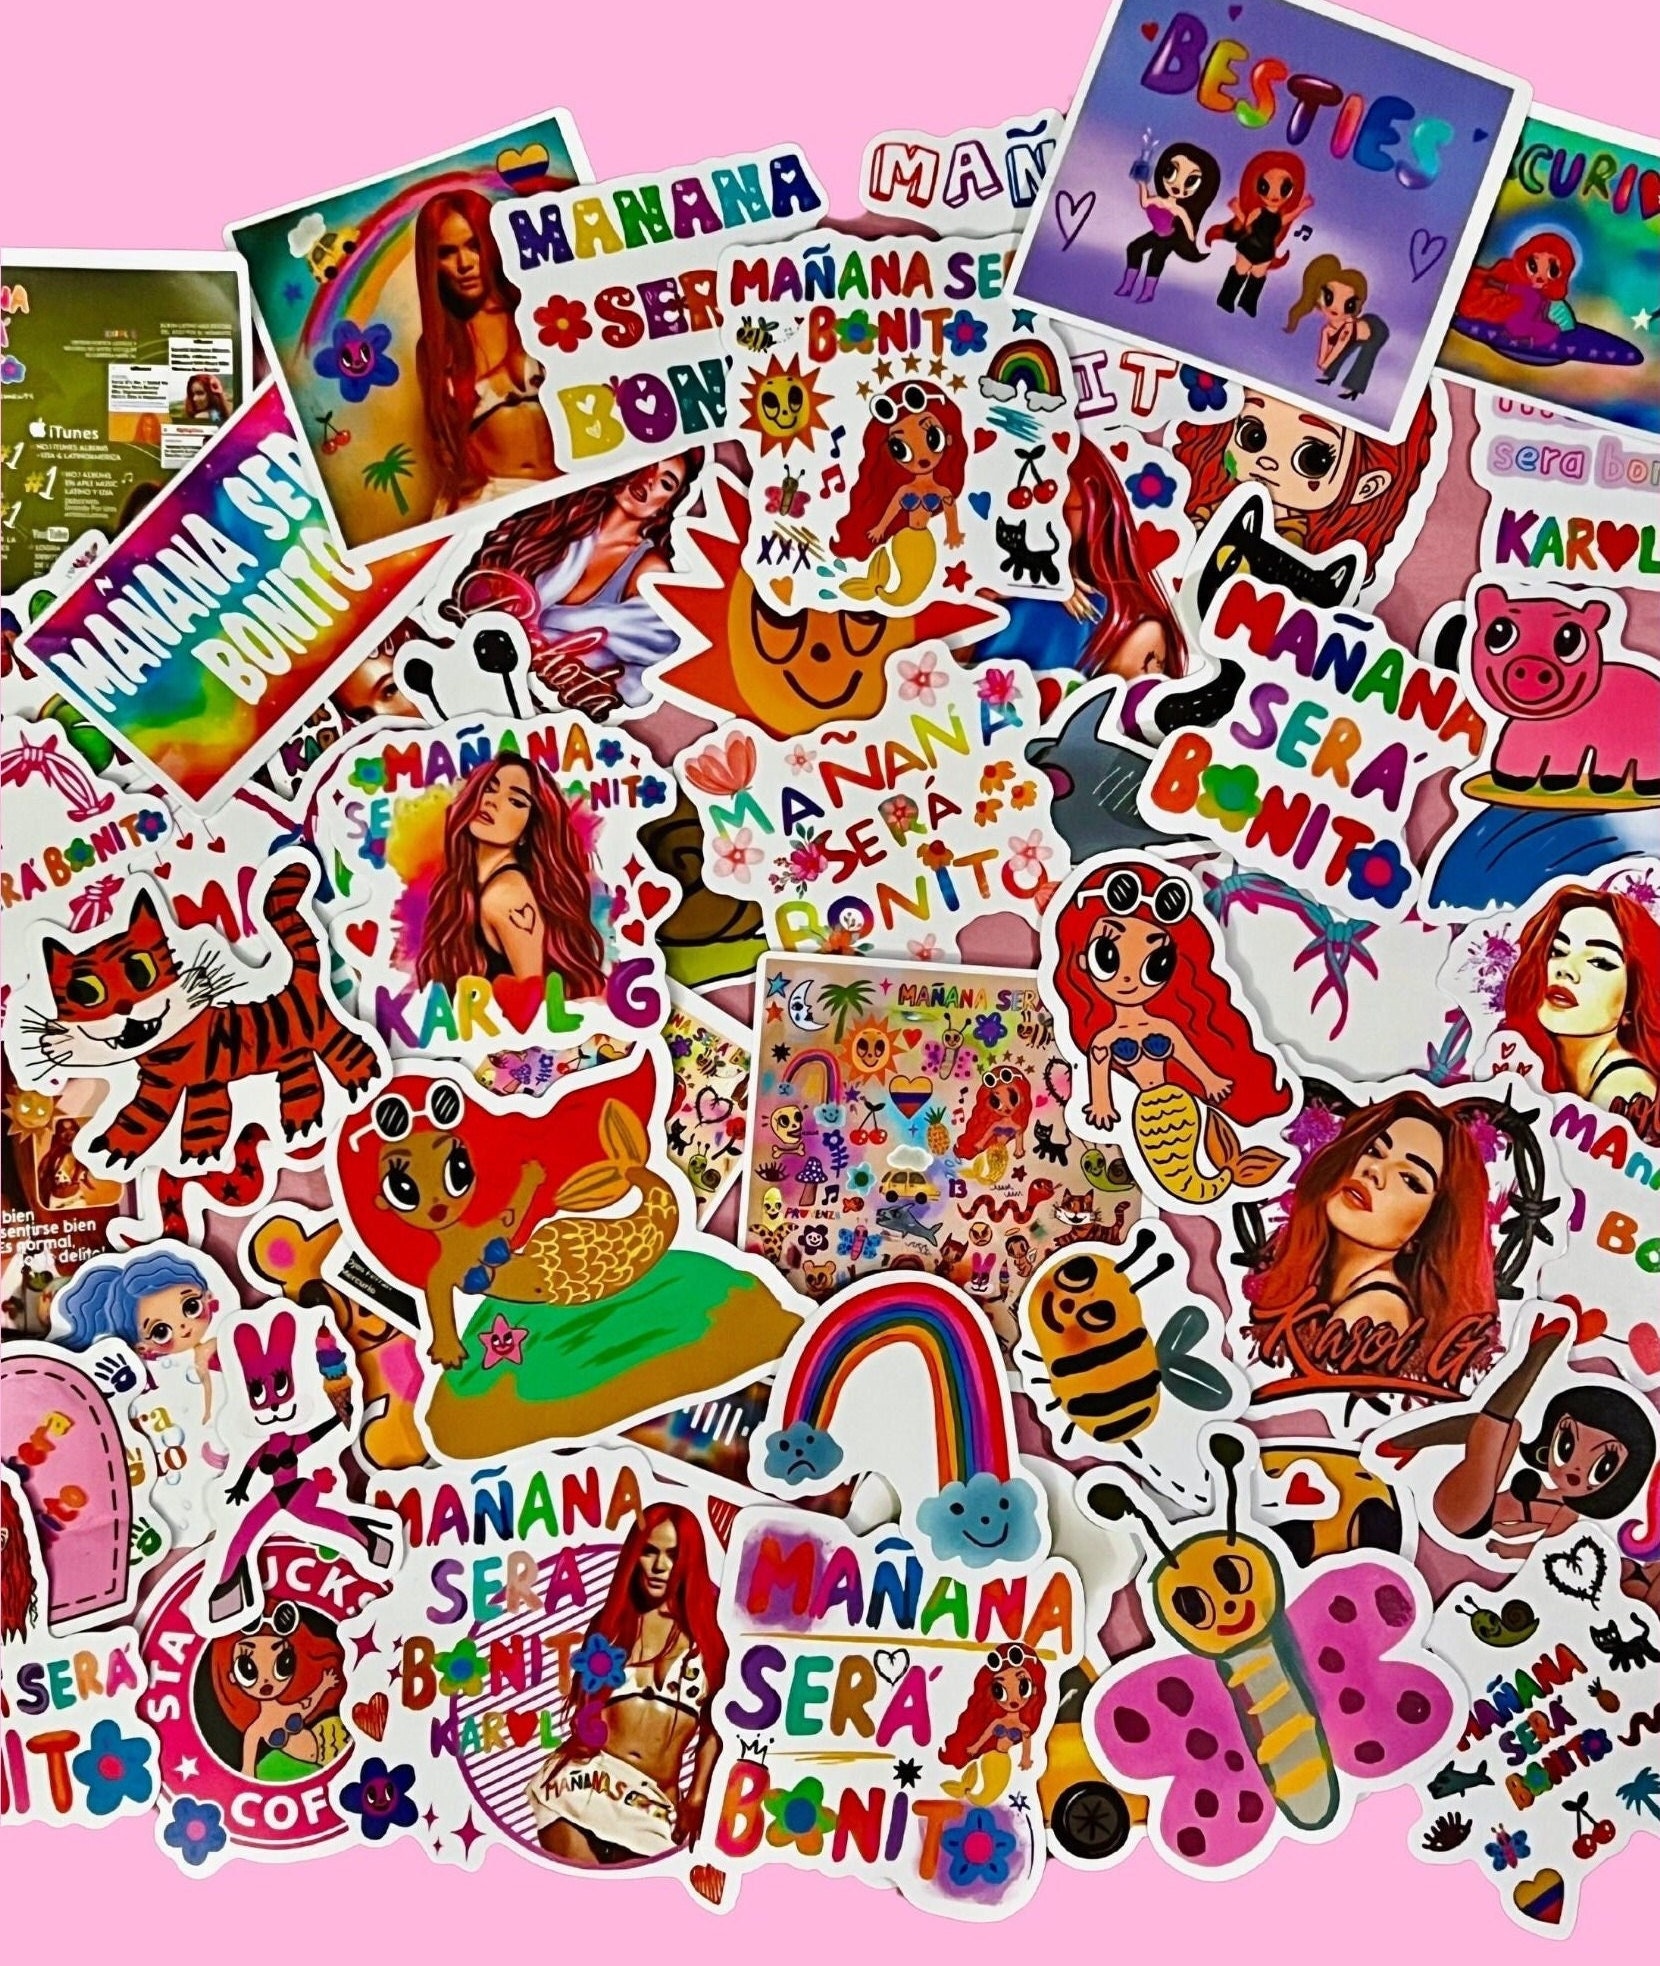 50pcs Music Album Stickers Manana Sera Bonito Stickers for Water Bottle Waterproof Vinyl Vsco Decals for Kids Laptop Tablet Scrapbook Binders